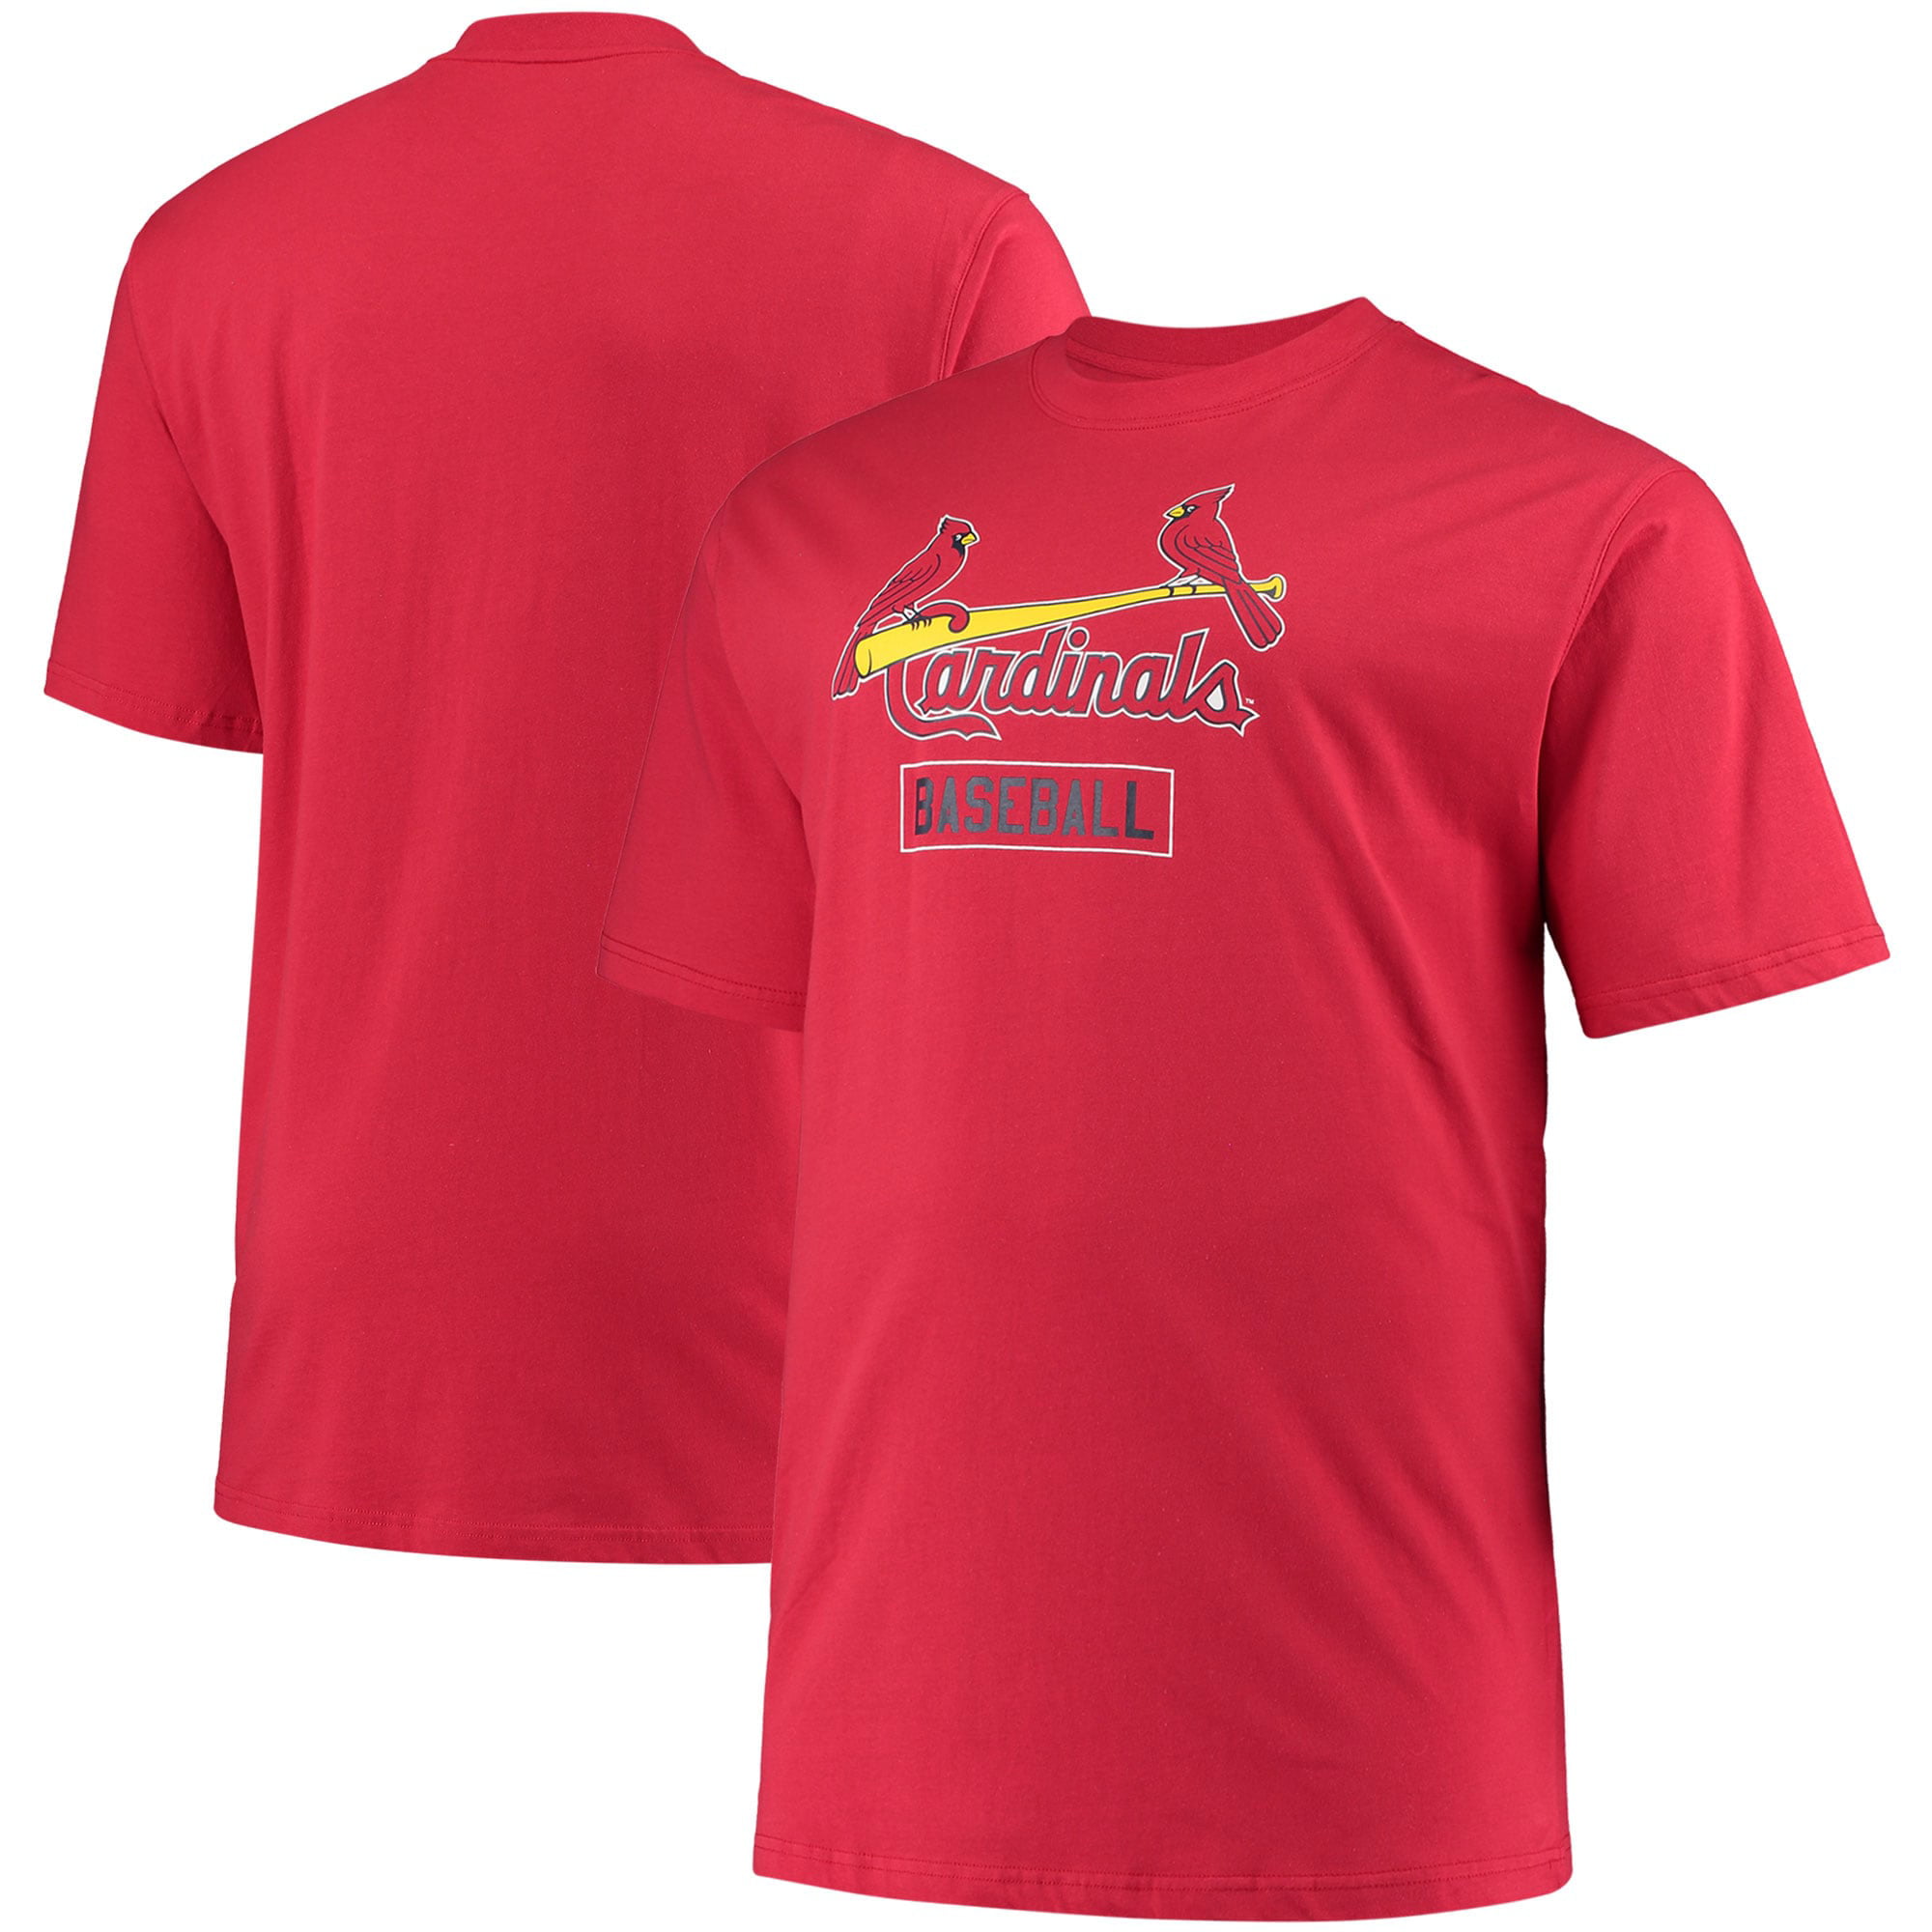 st louis cardinals big and tall shirts